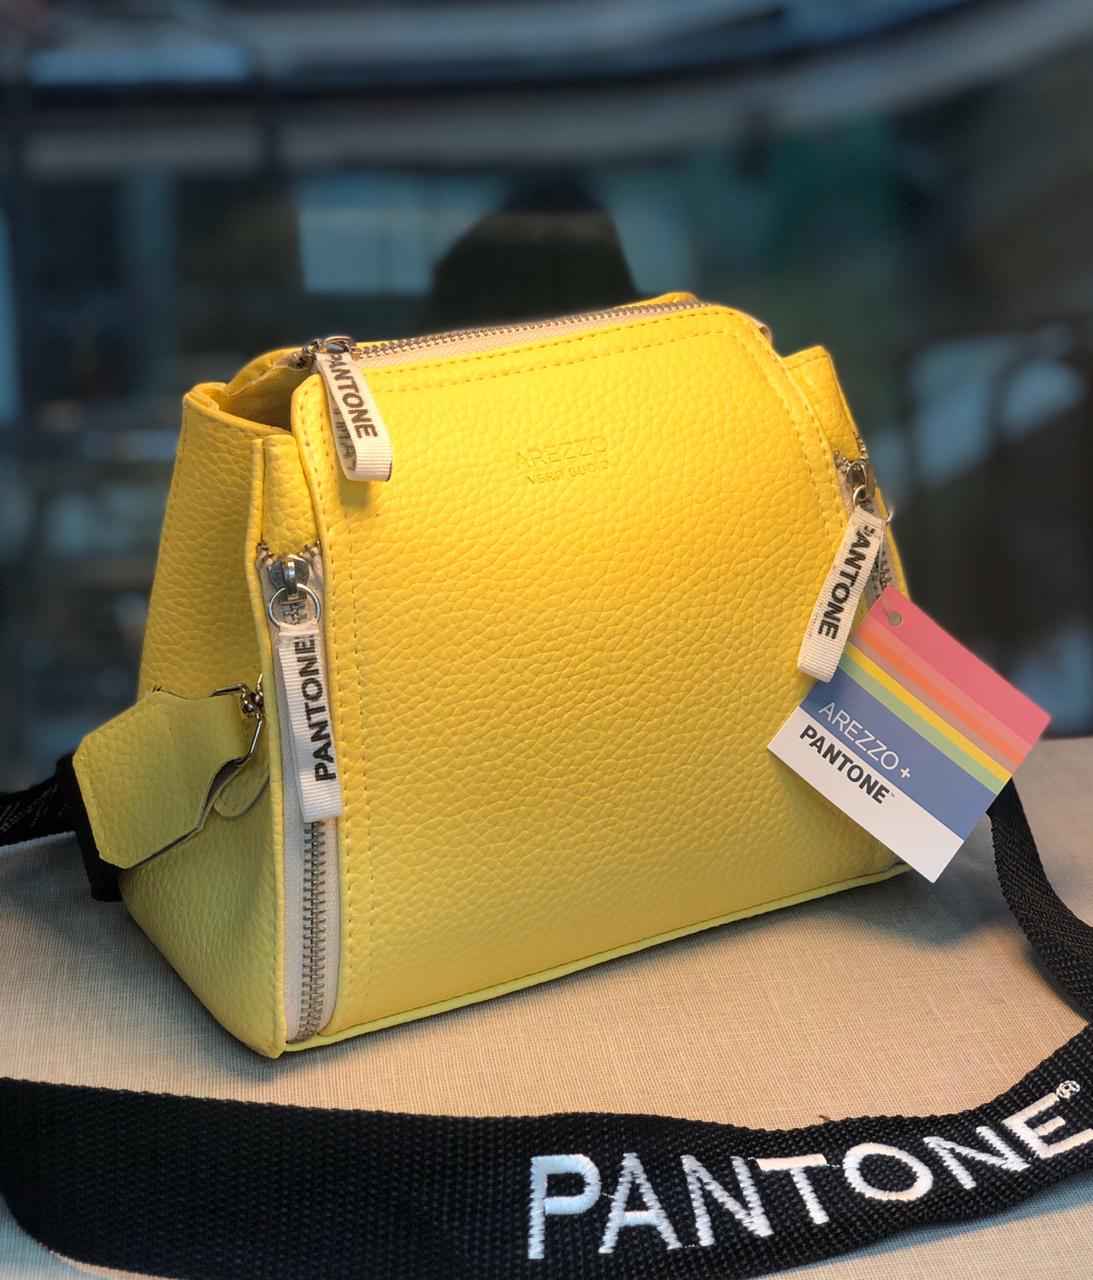 bolsa Arezzo Pantone colors - Bom gosto bolsas e acessórios